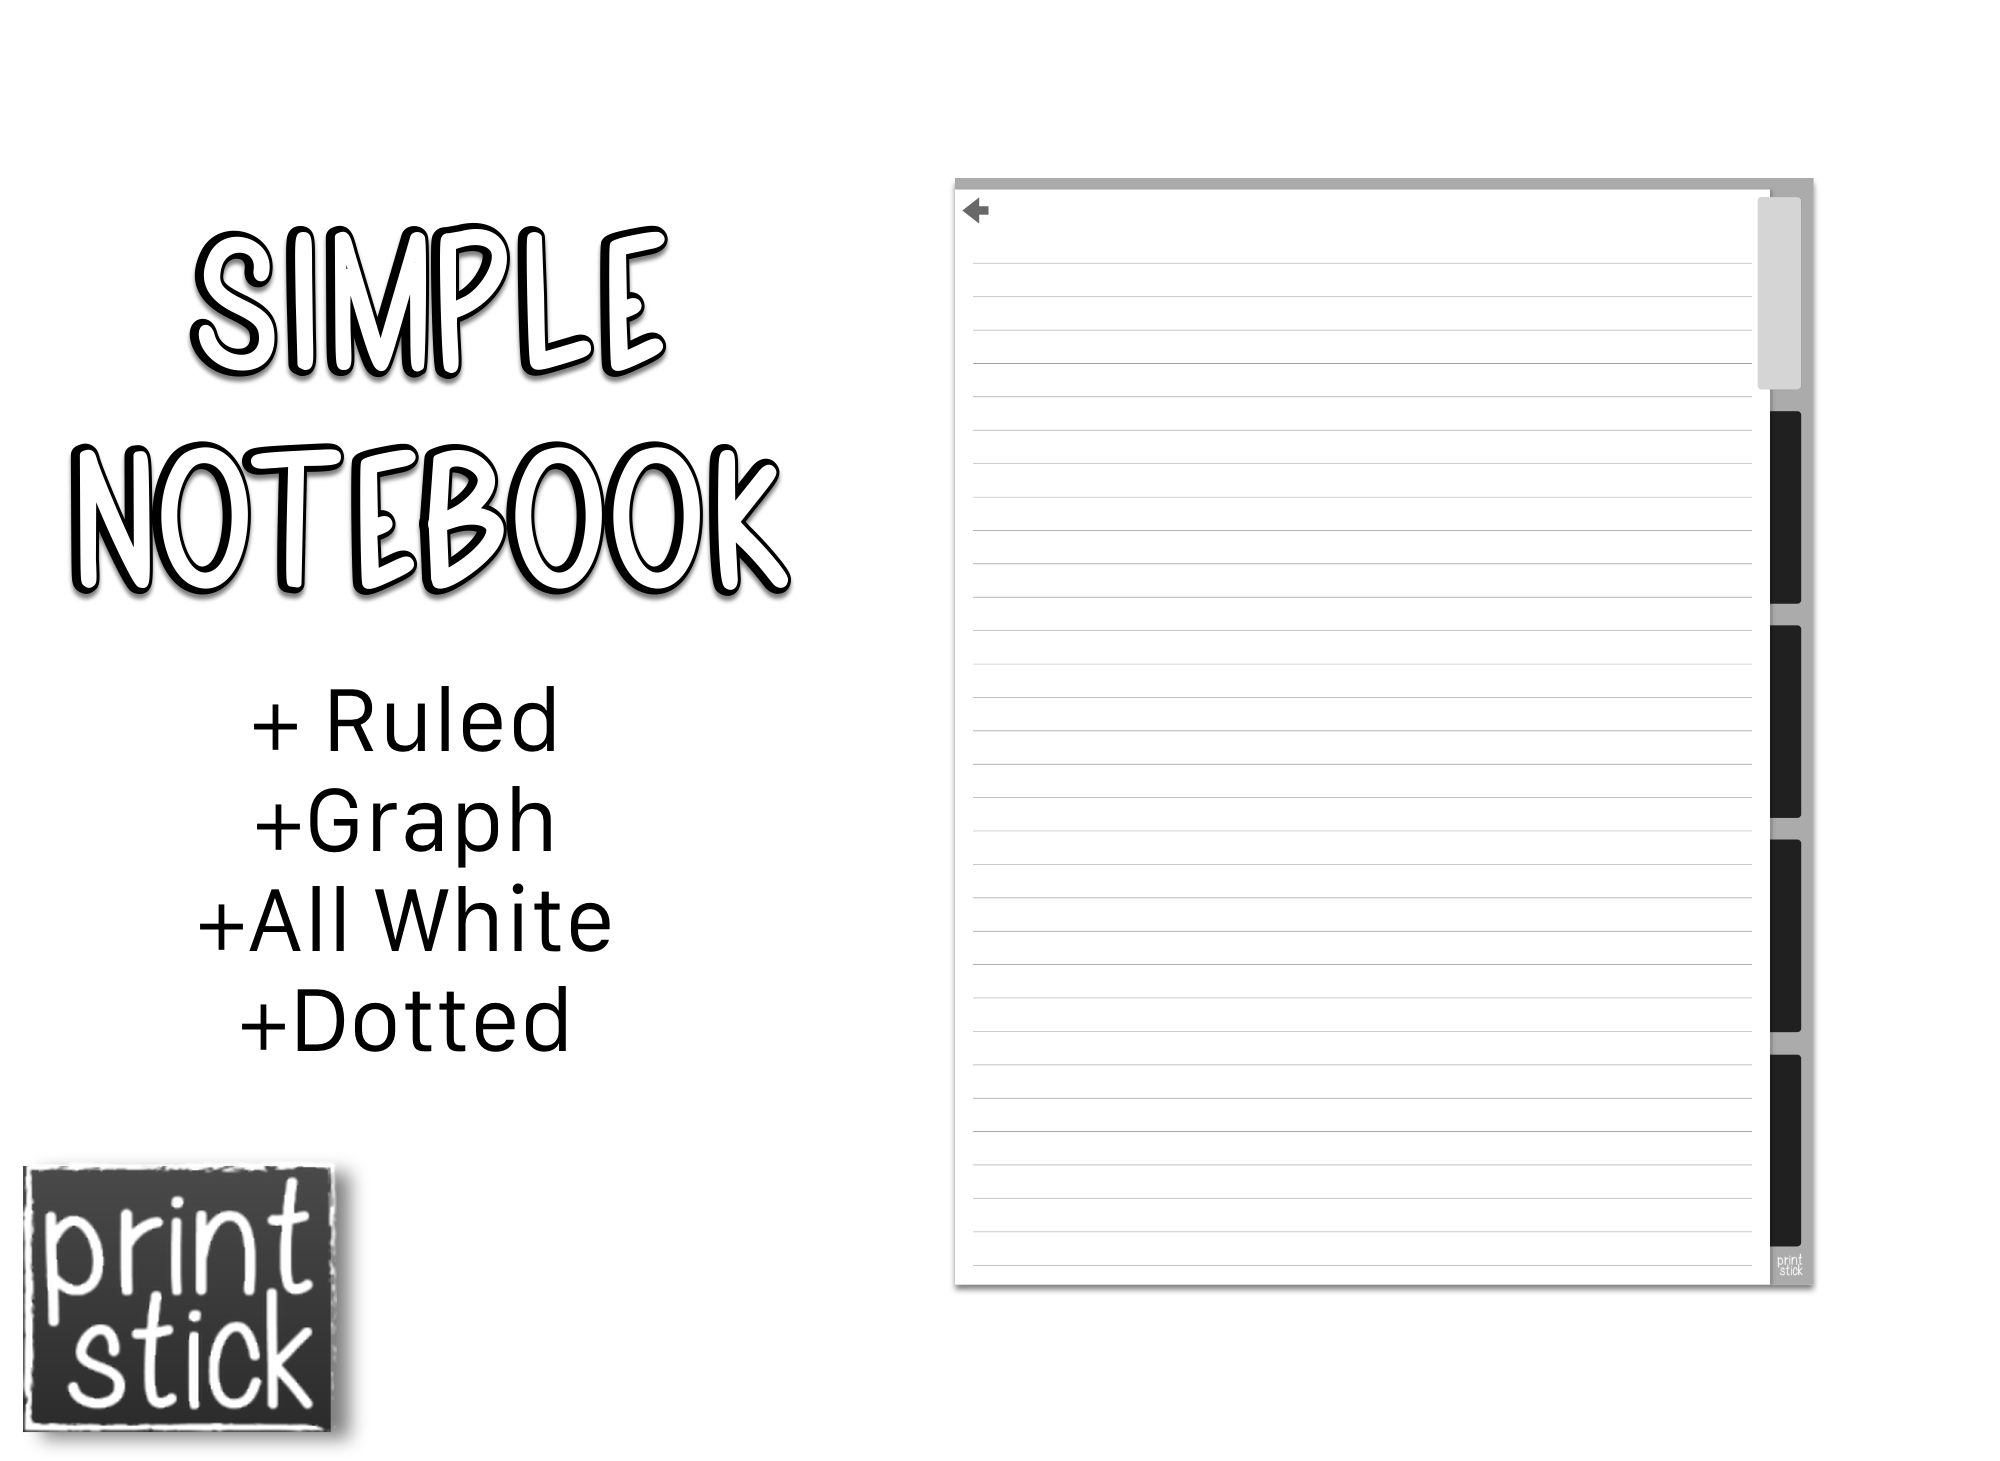 Simple Notebook - Print Stick